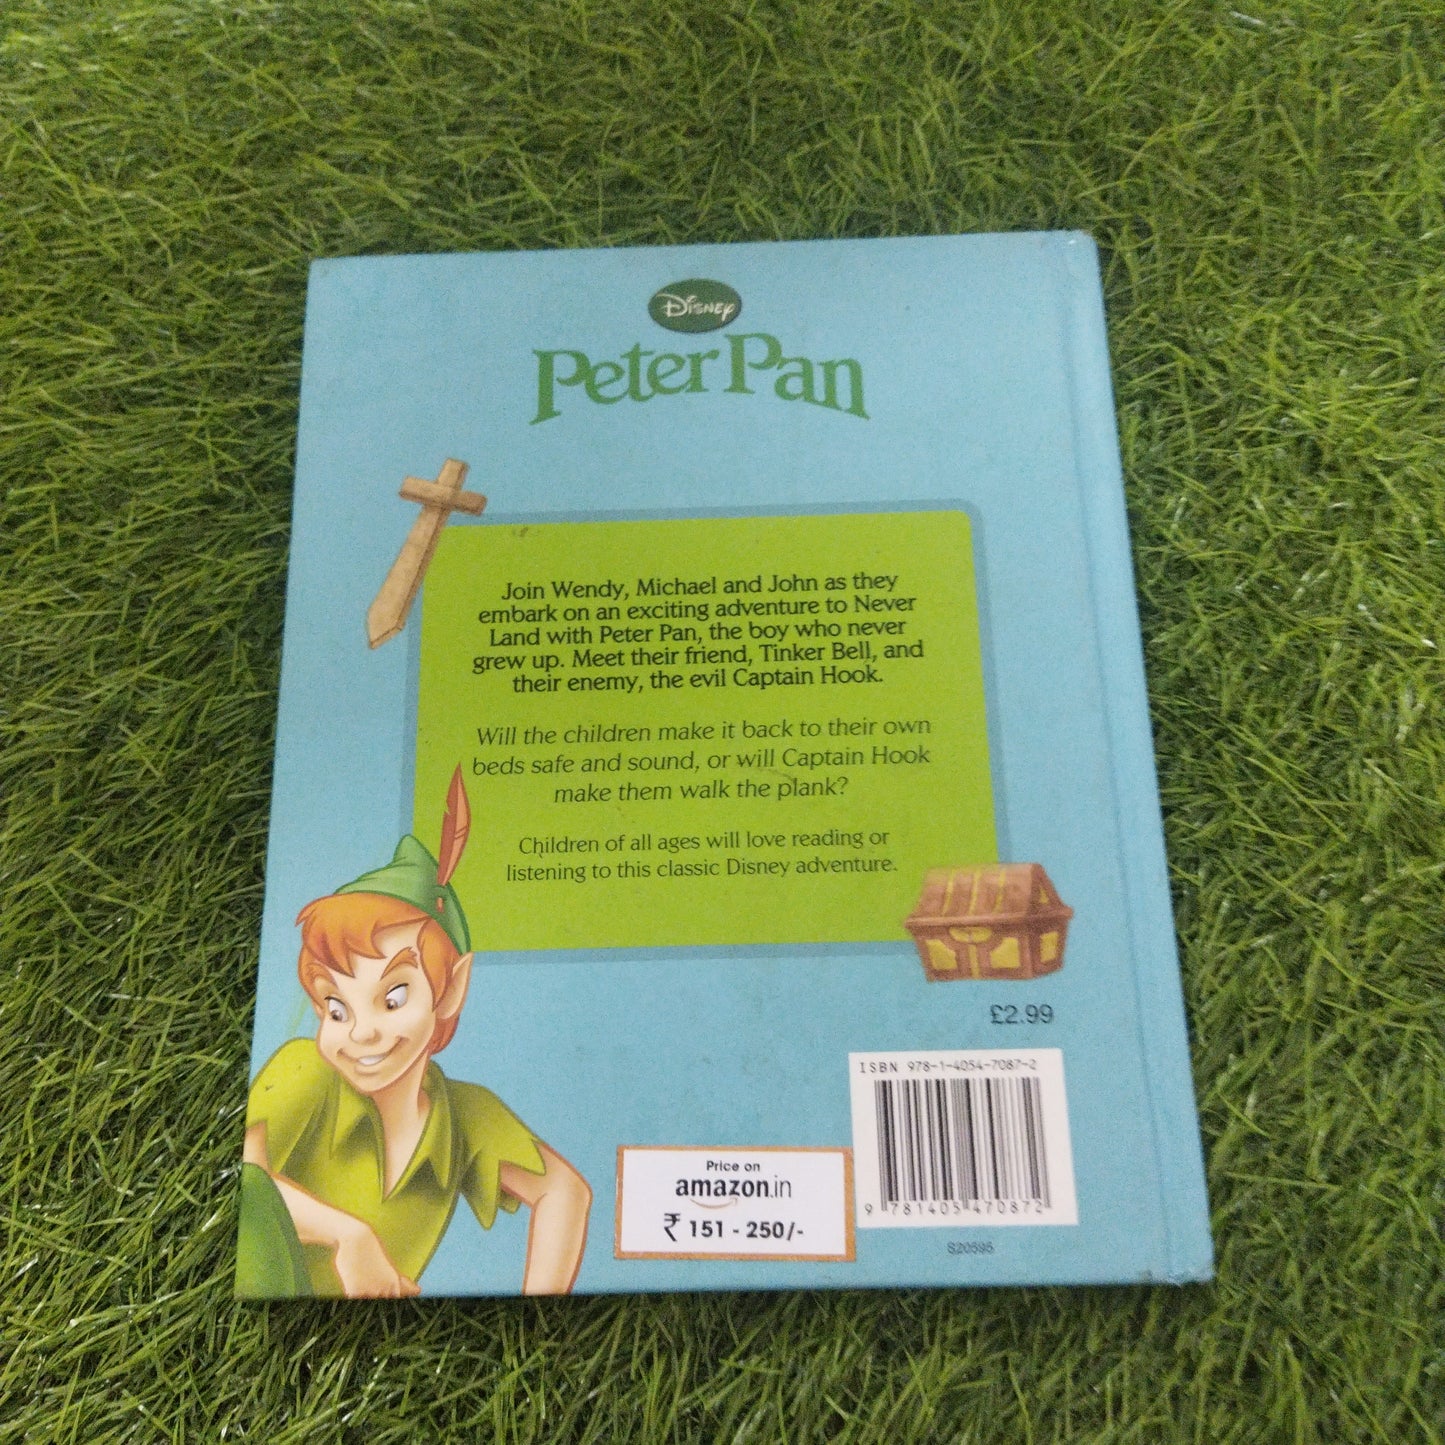 Disney Peter Pan the Magical Story